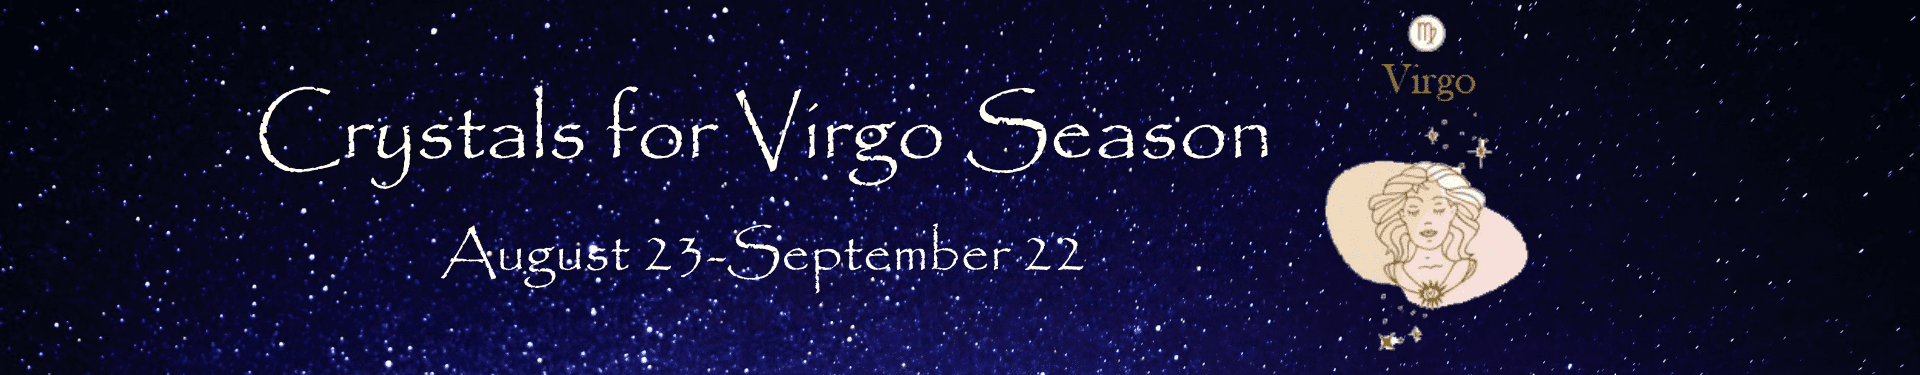 Virgo Season Banner